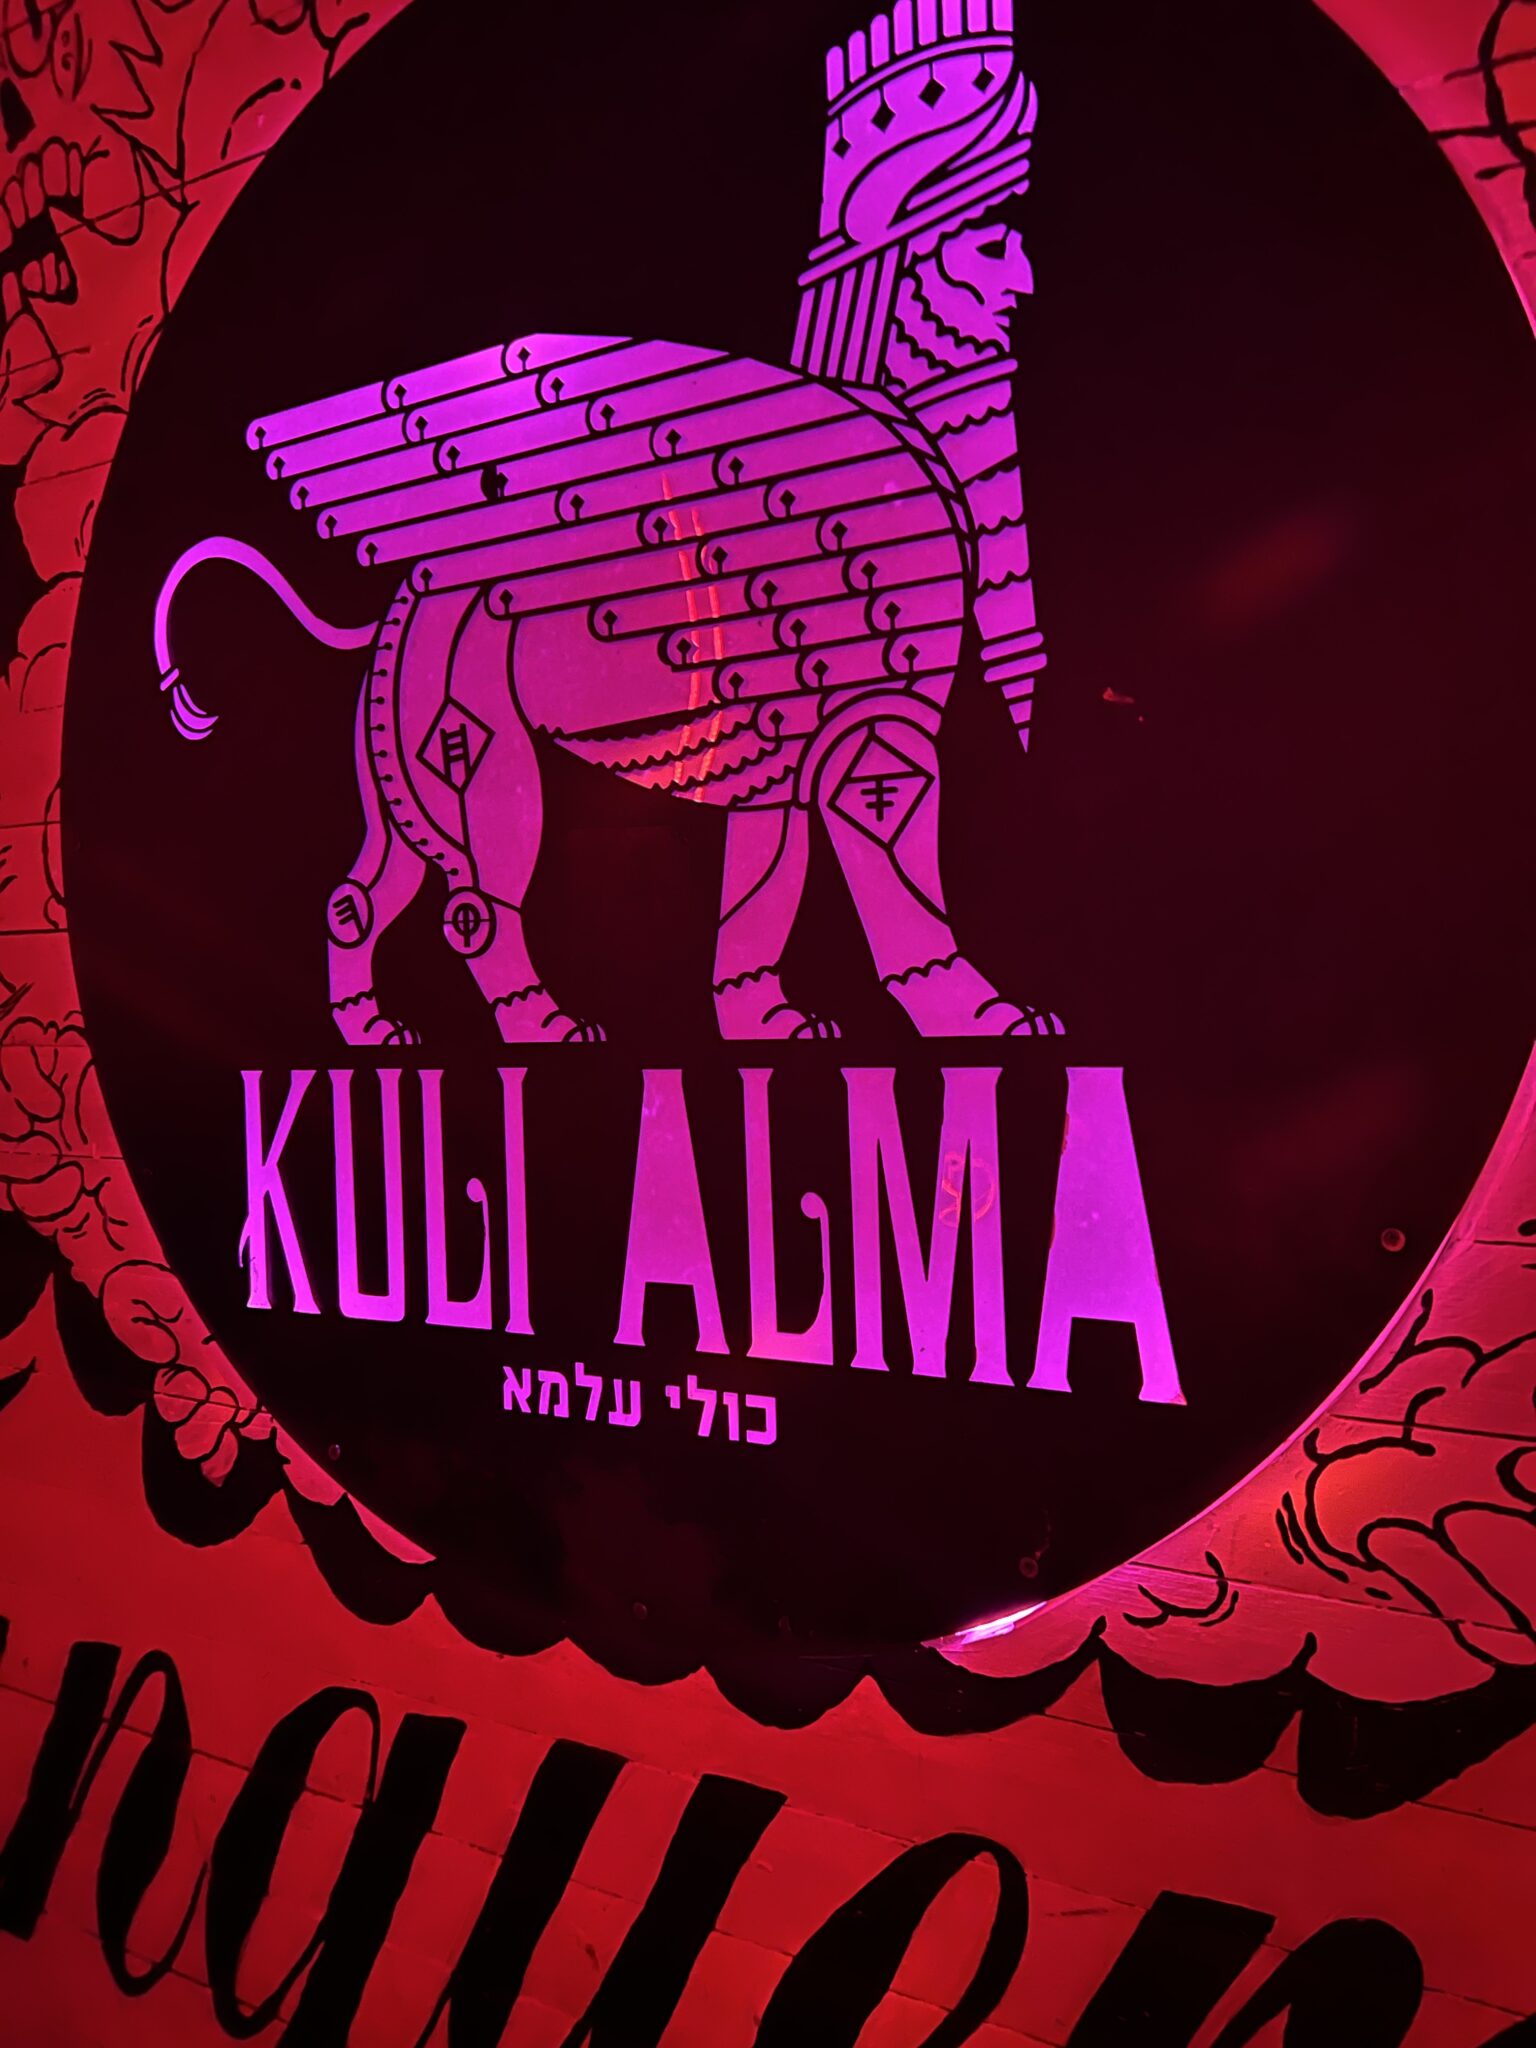 Kuli Alma Clubschild, Fabelwesen mit Schriftzug darunter, pink leuchtend